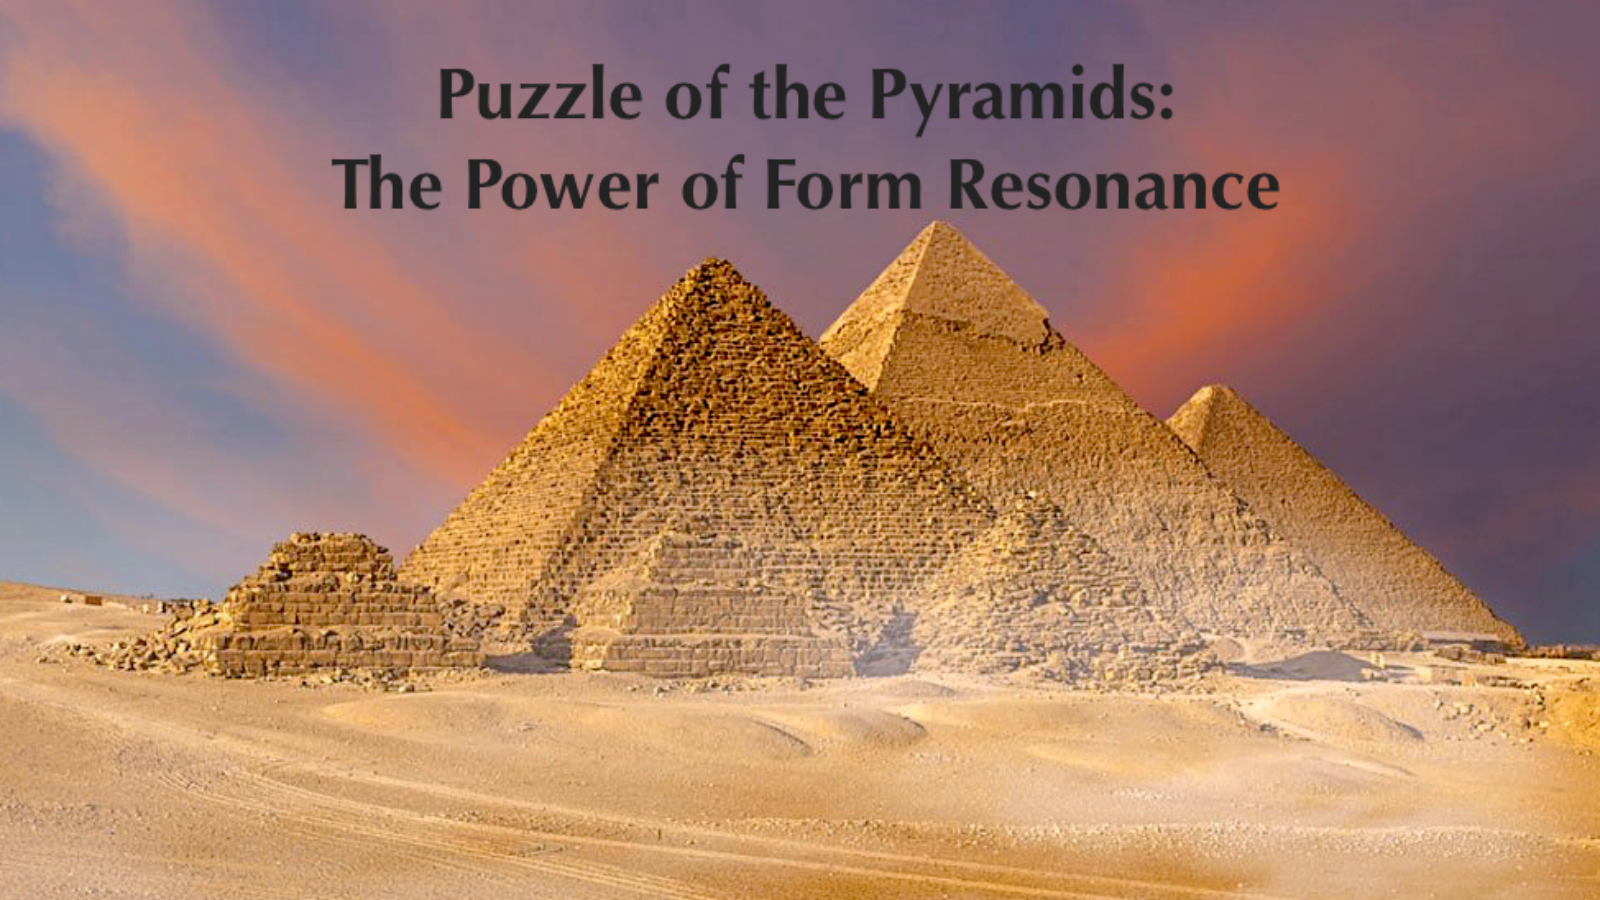 Pyramids and Form Resonance